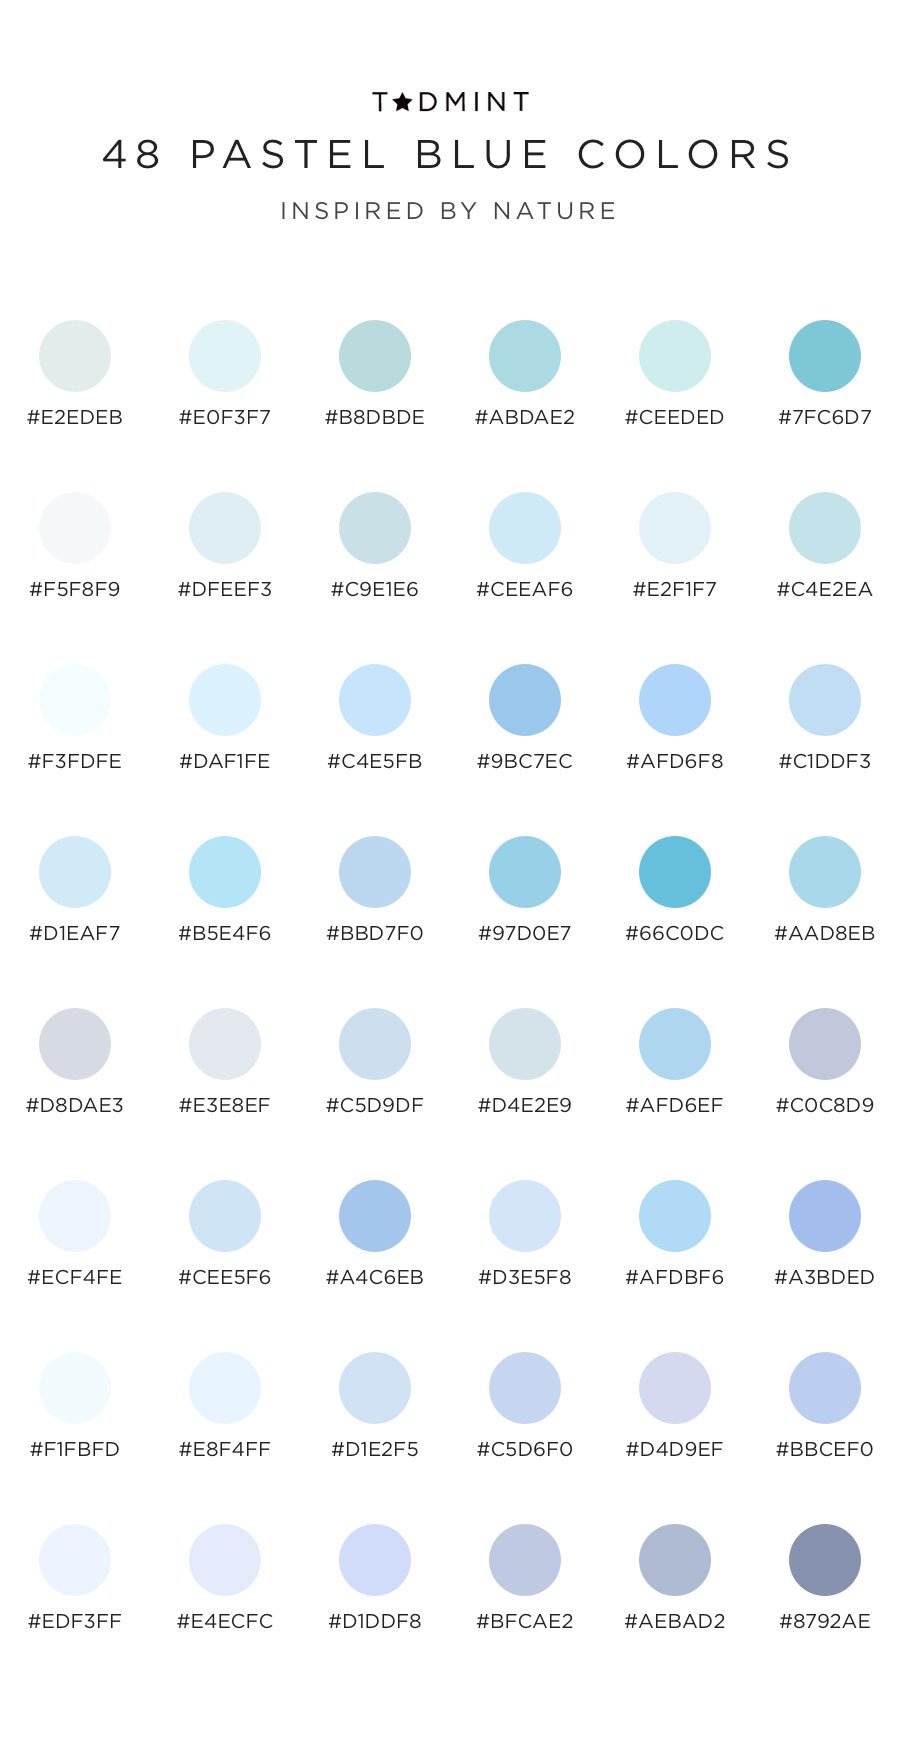 https://images.squarespace-cdn.com/content/v1/62d818ca4f23e63a44d79cc4/1662903700139-WP1ZFNNOBZSNPPMMRZ6D/tadmint-pastel-blue-colors-summary-min.jpg